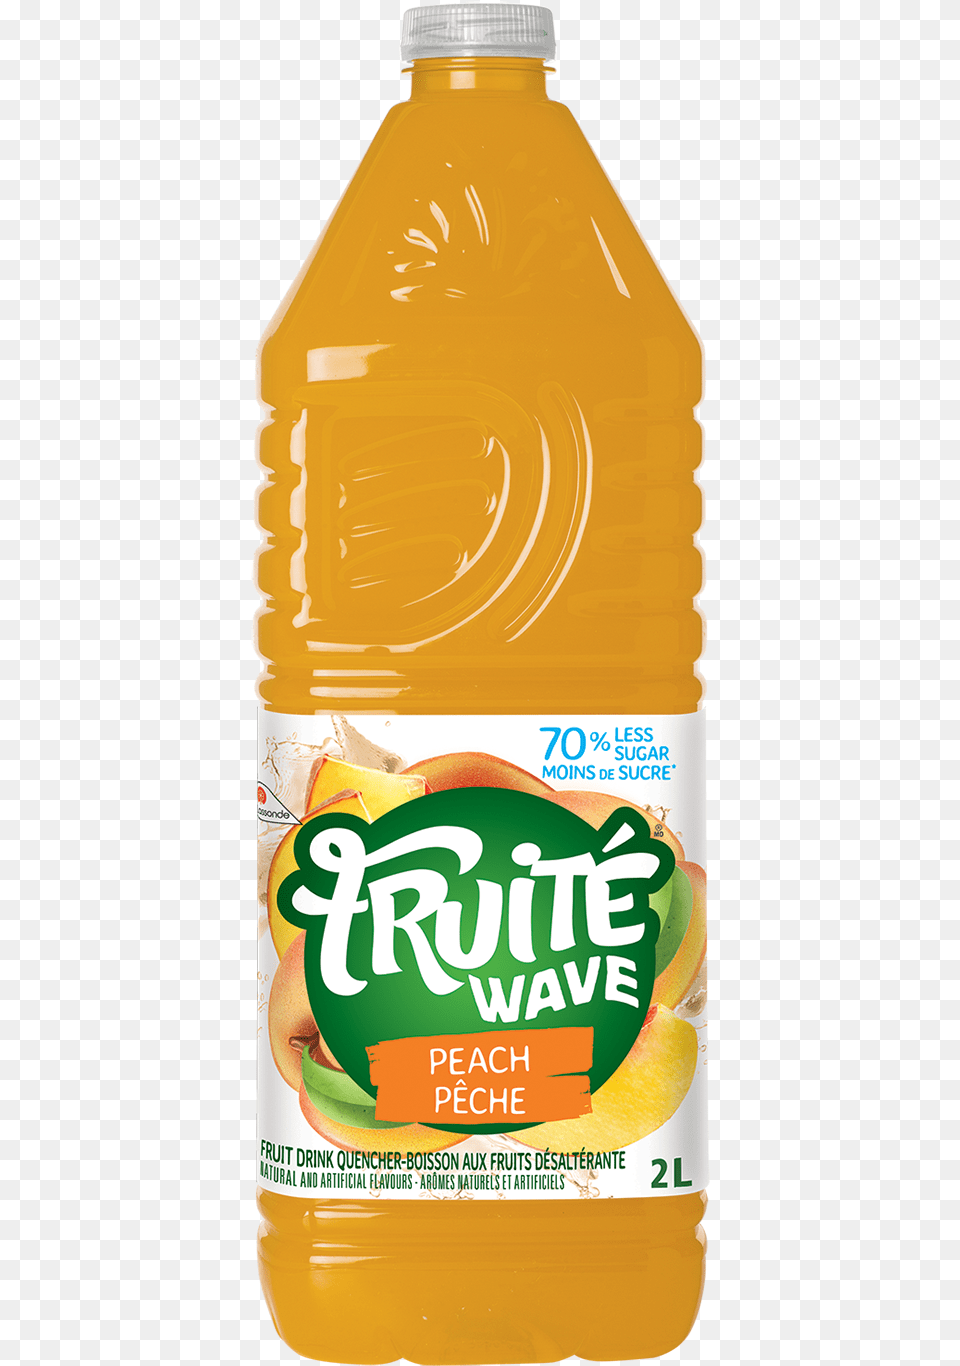 Fruit Juice 70 Less Sugar, Beverage, Orange Juice Png Image